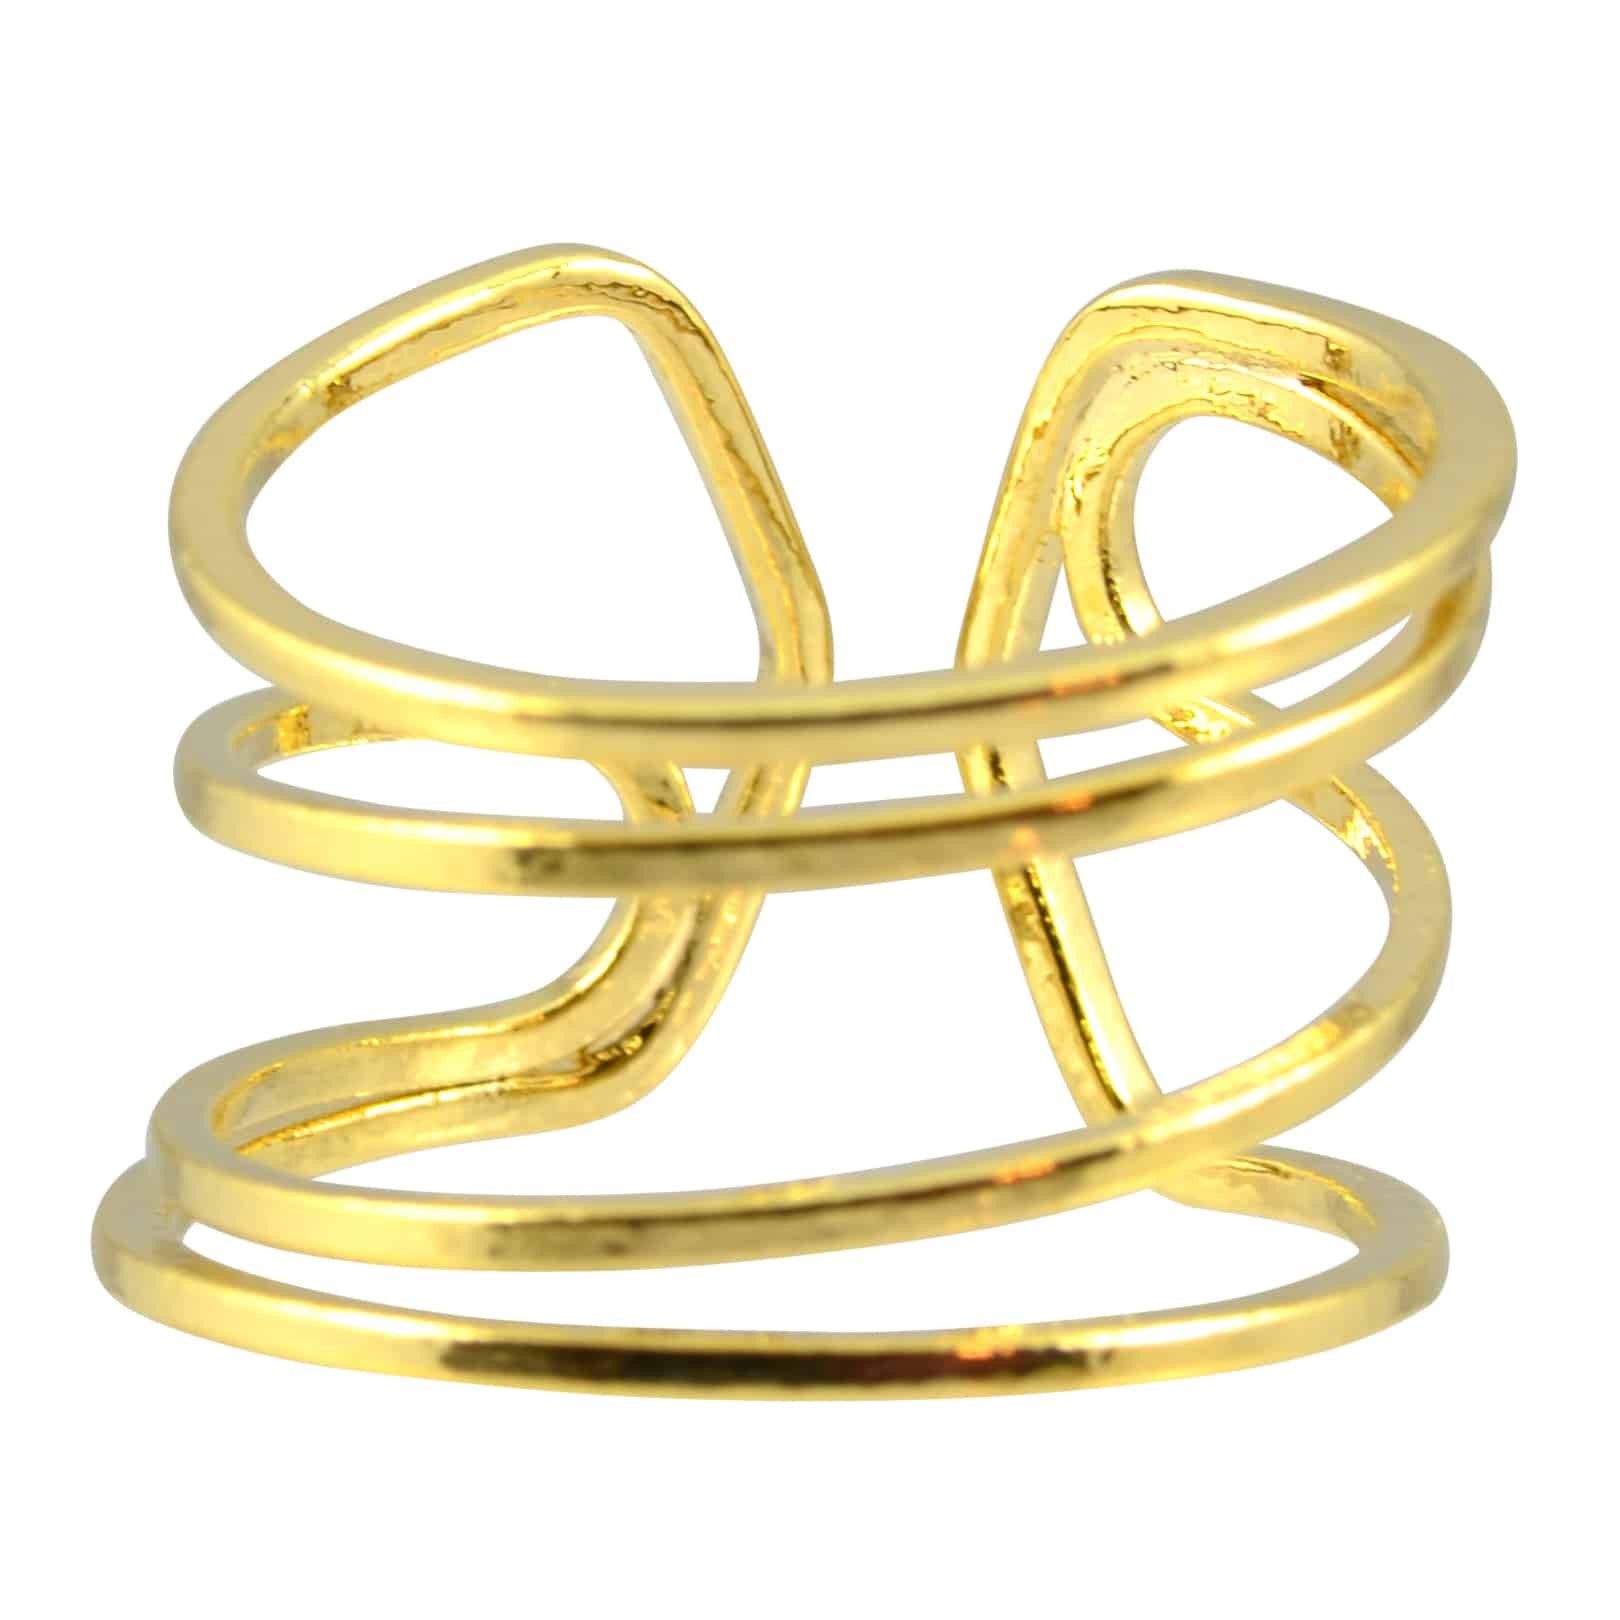 Enreverie 4 Lines Ring, Gold Plated Adjustable